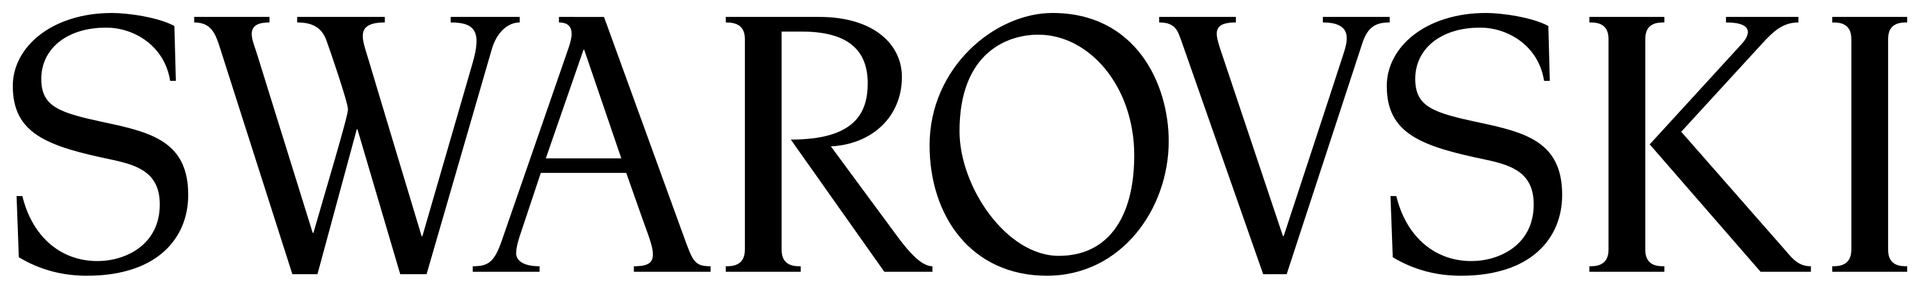 SWAROVSKI logo die aktuell Flugblatt